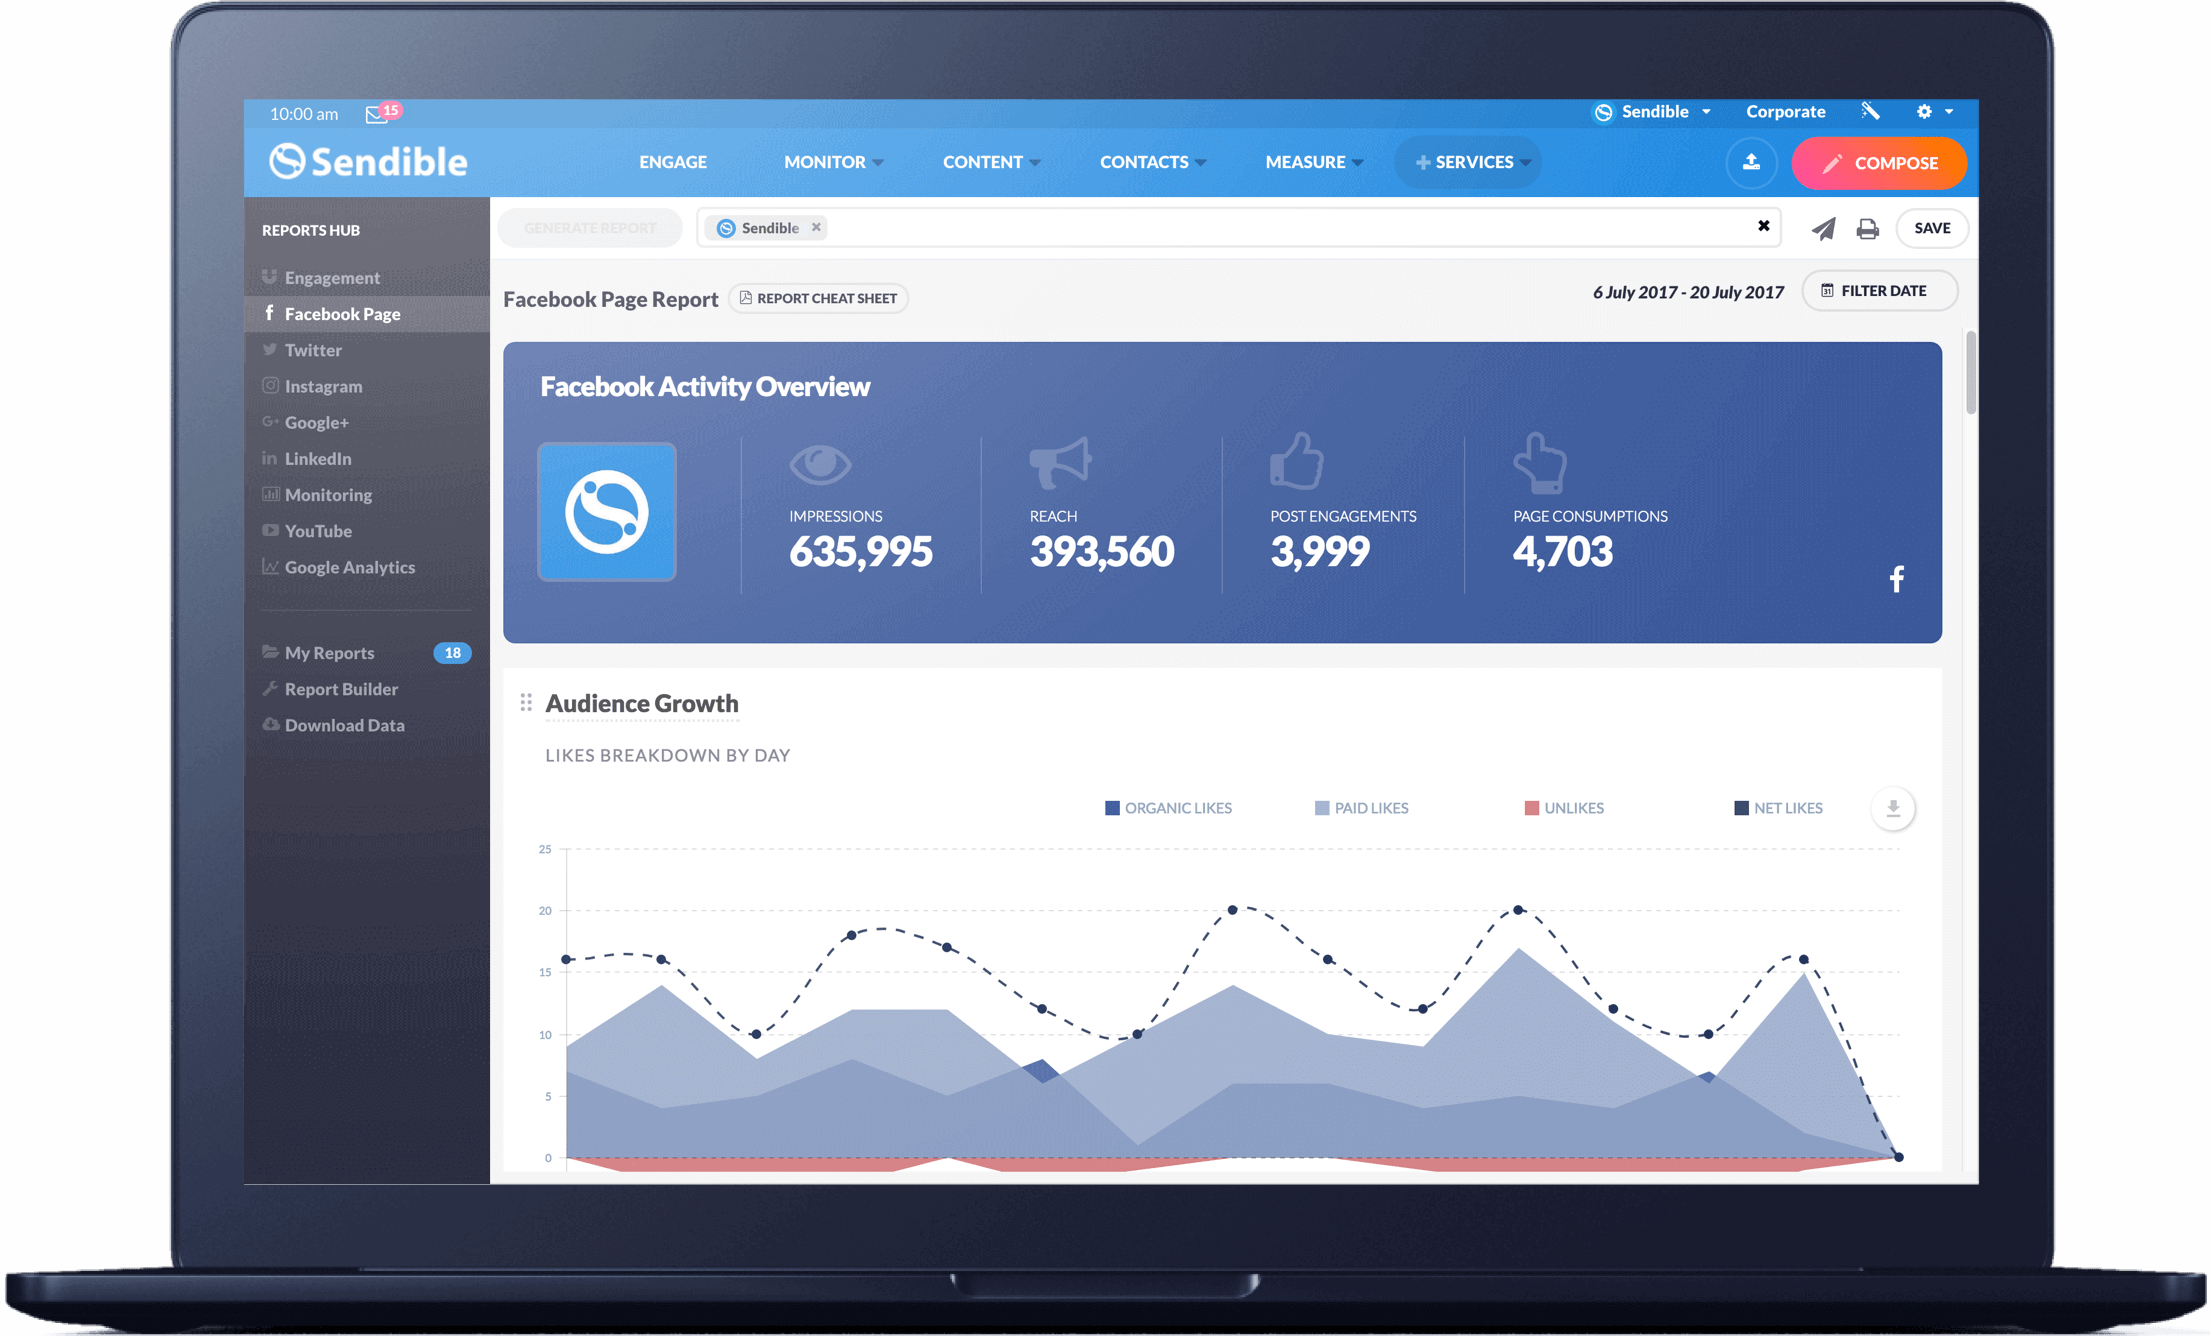 Sendible's analytics dashboard